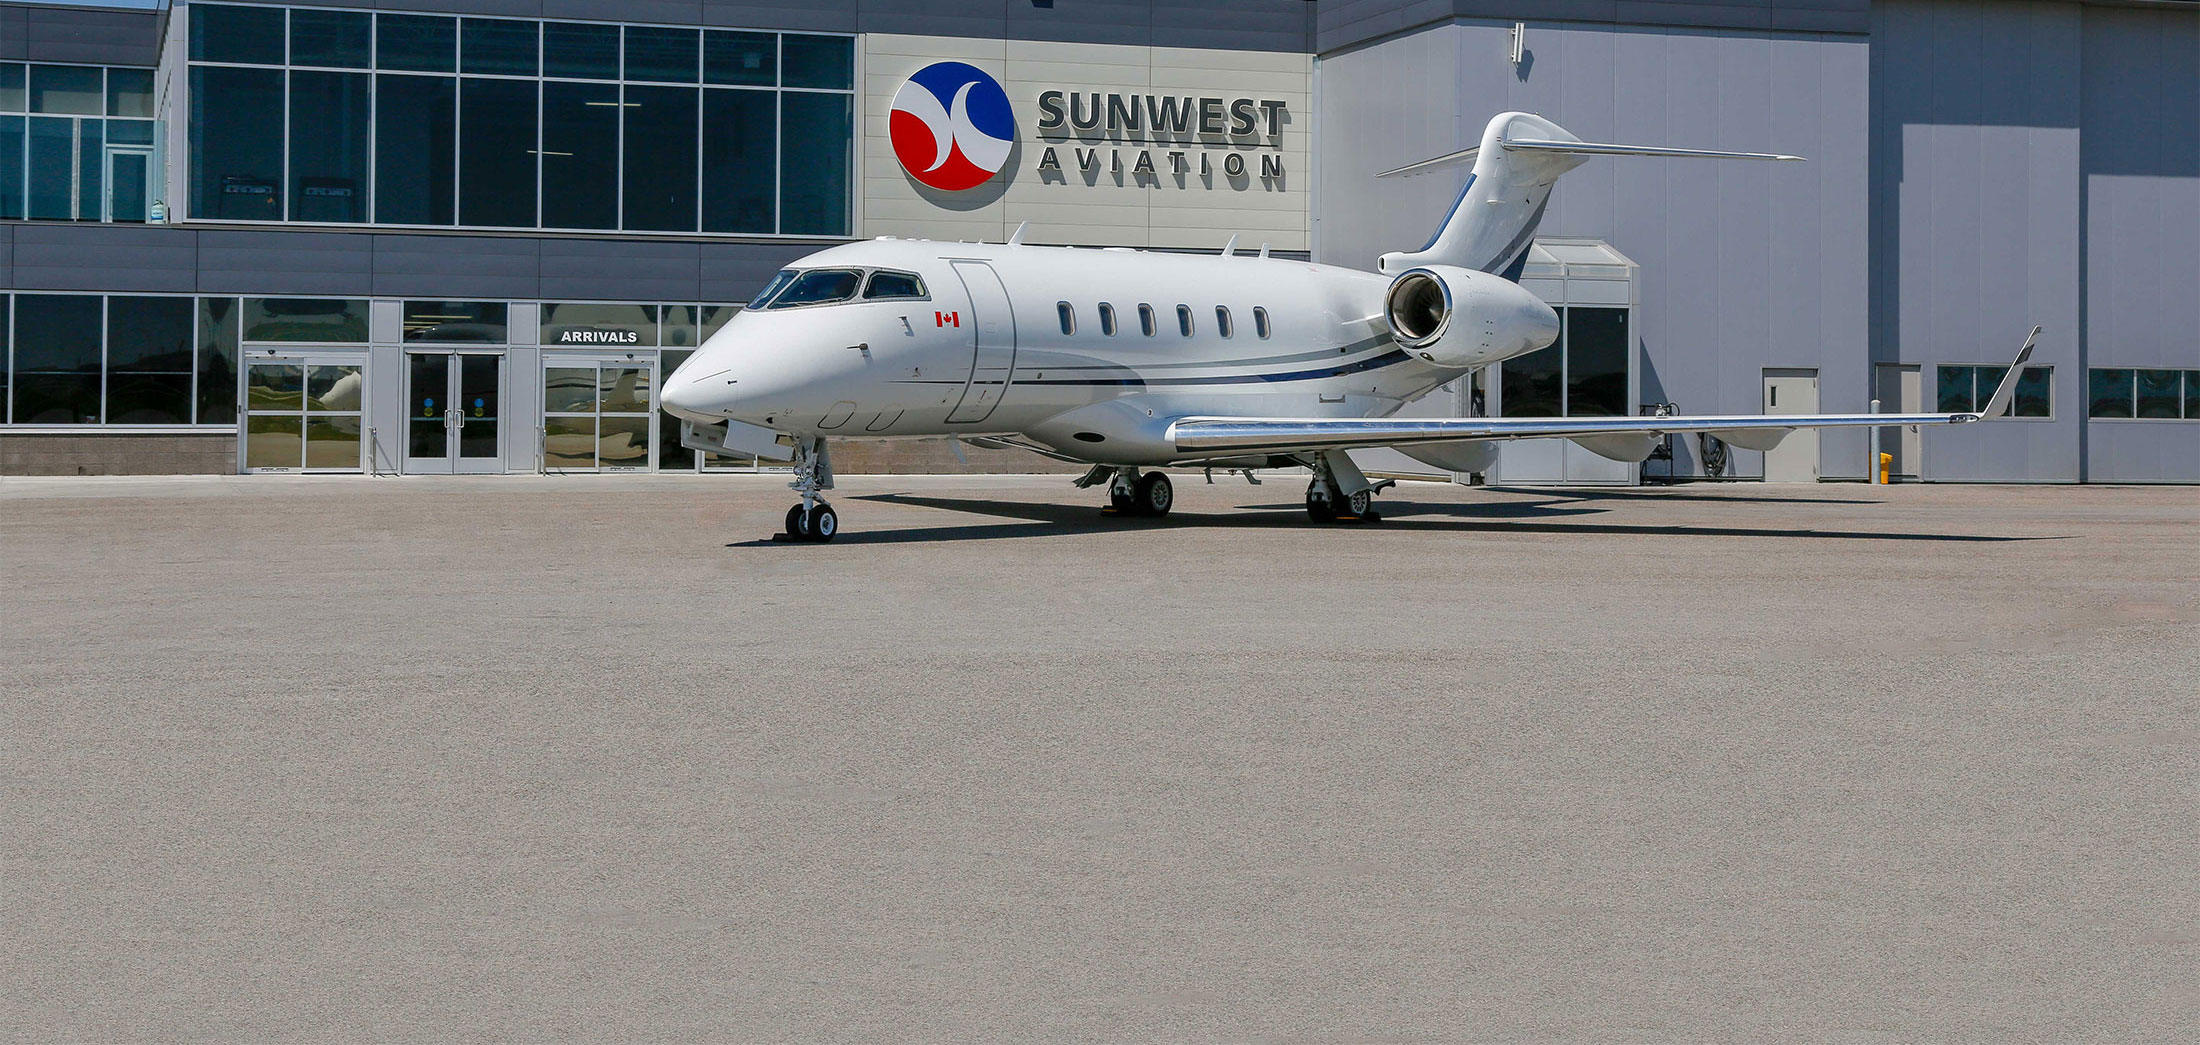 Sunwest Aviation